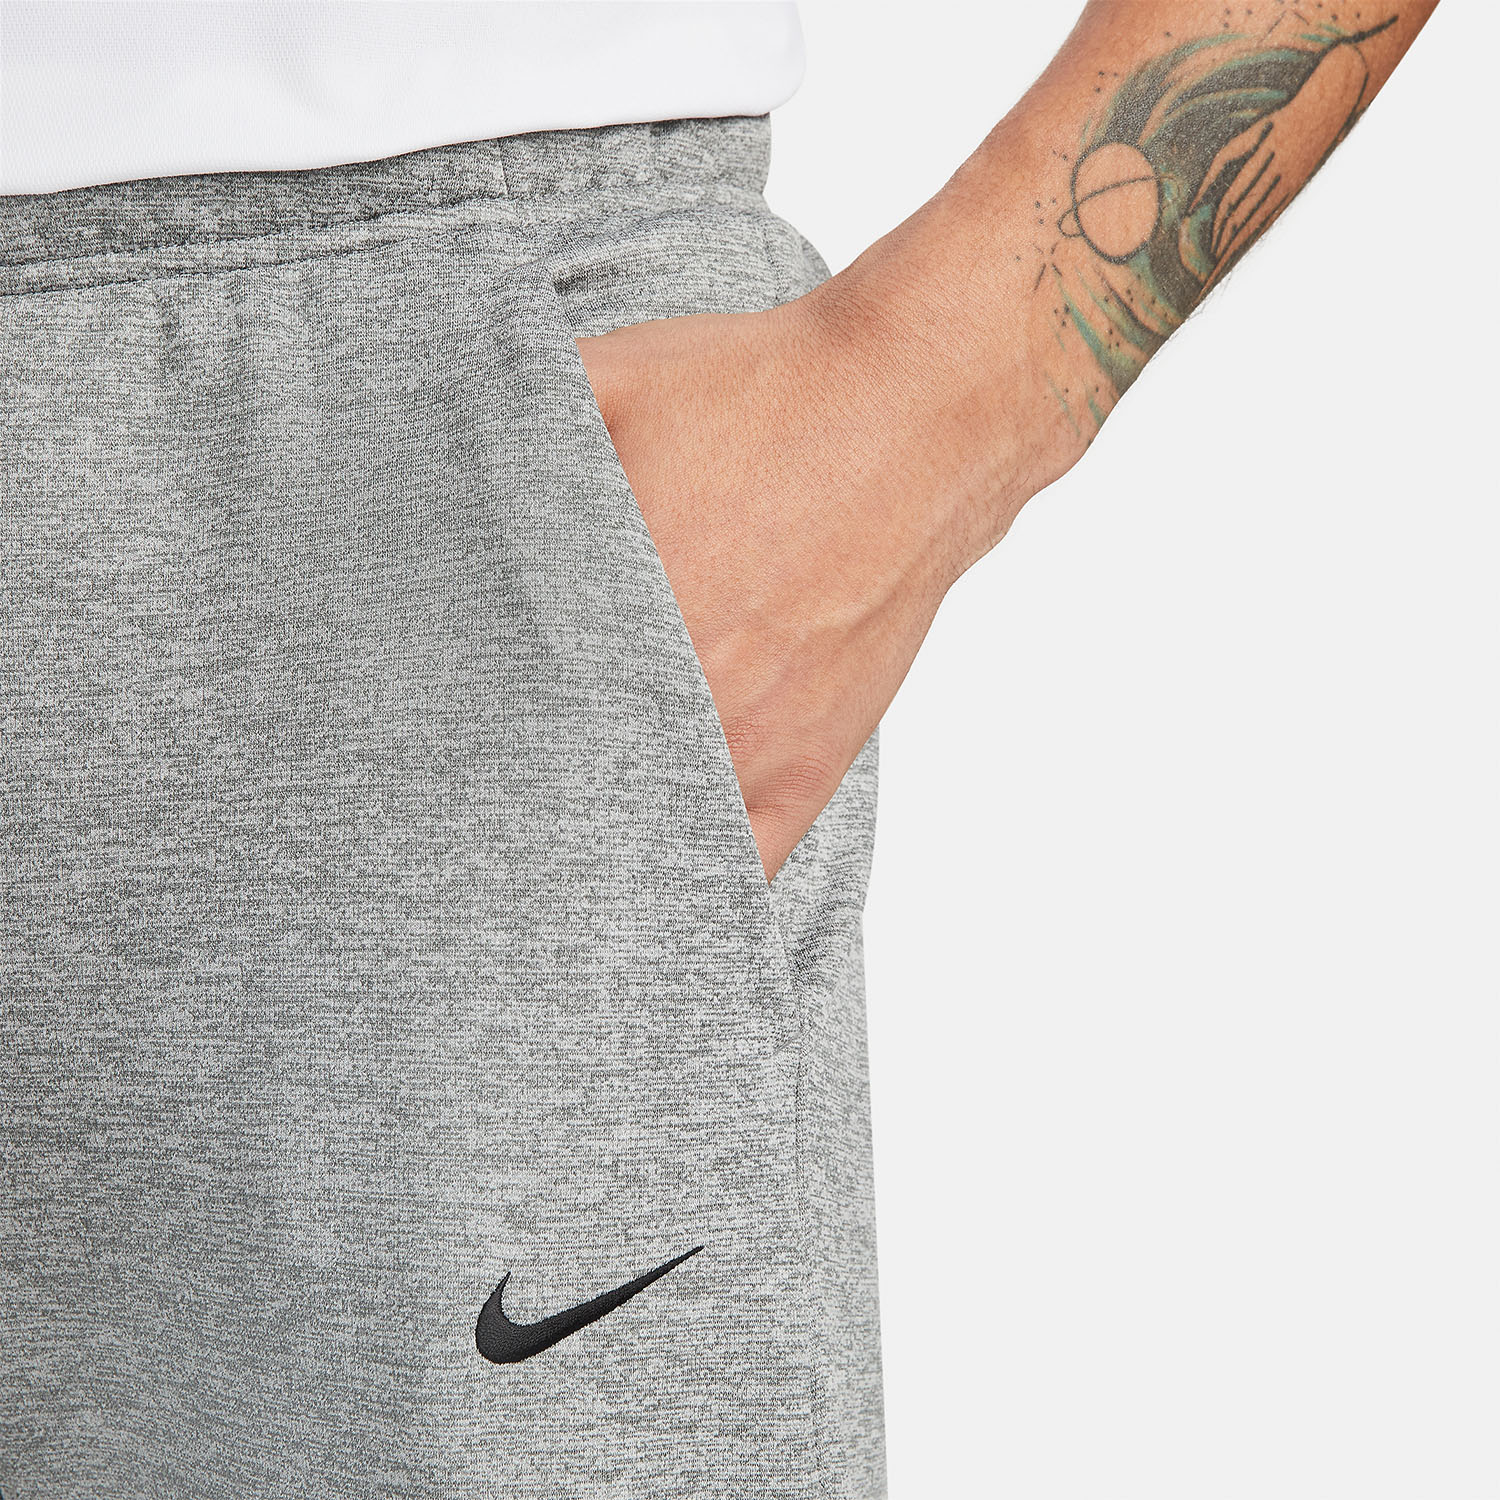 Nike Therma-FIT Logo Pantalones - Dark Grey Heather/Particle Grey/Black